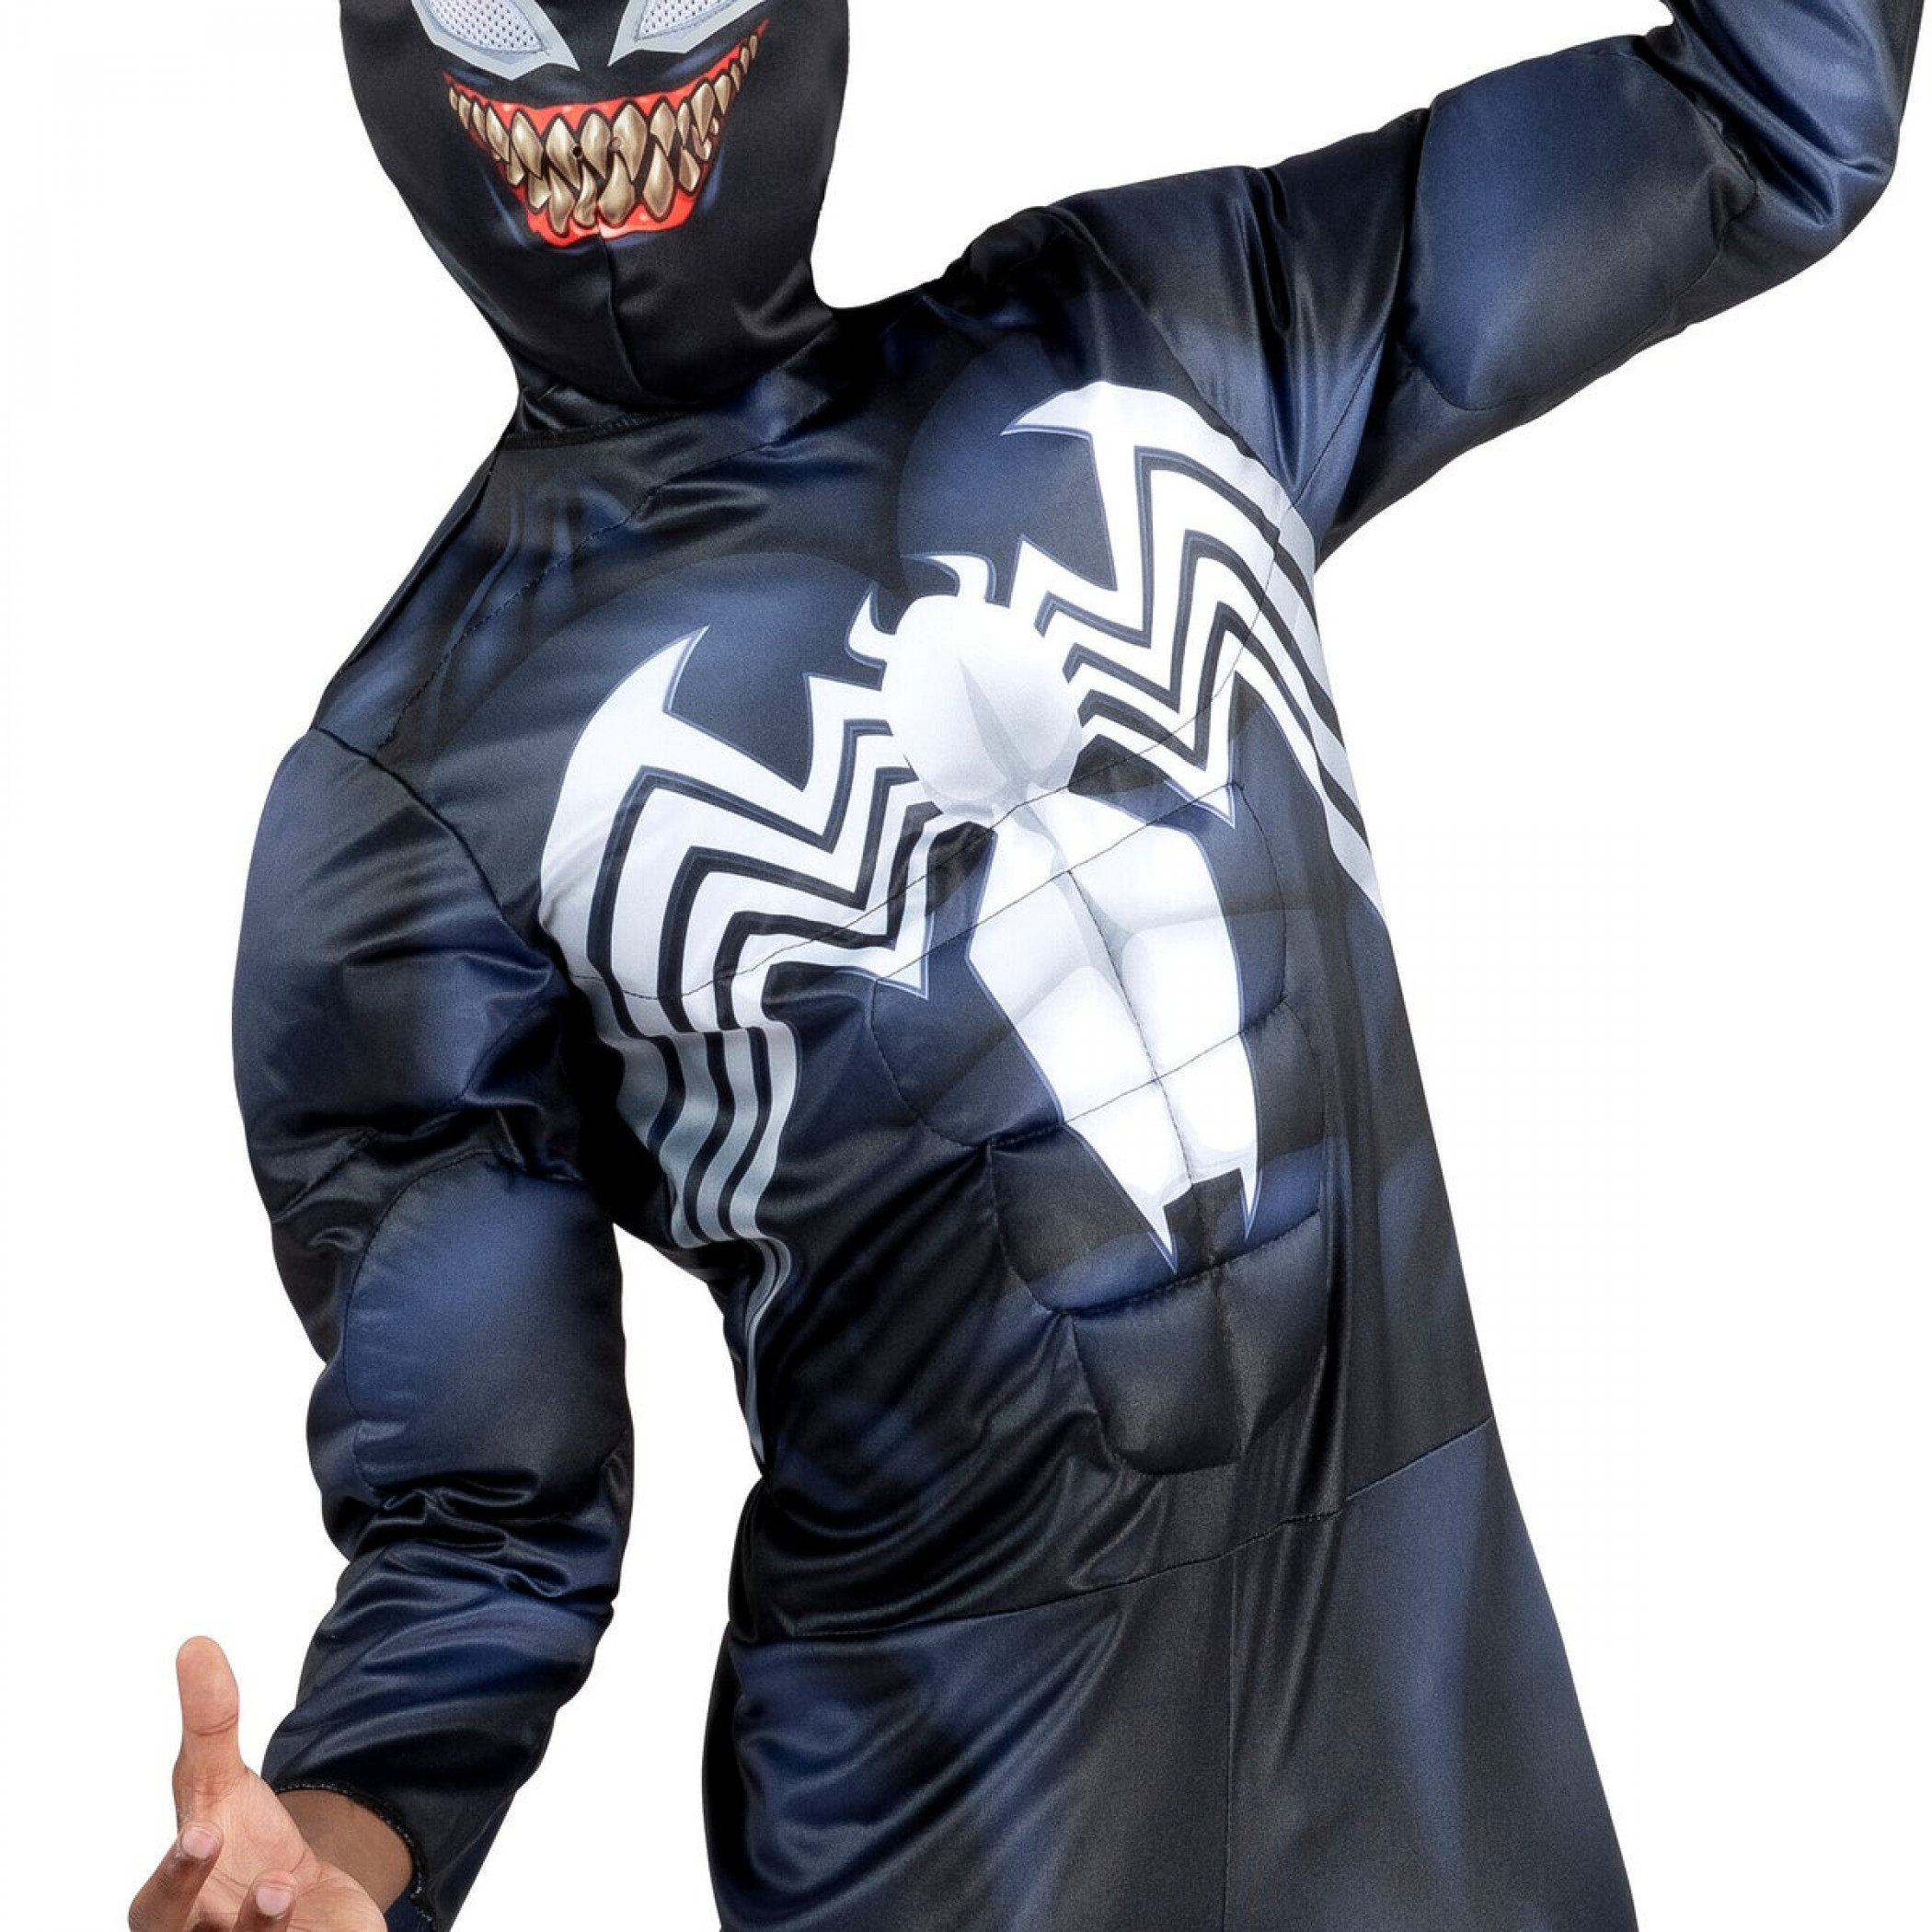 Venom Foam Padded Boy's Costume